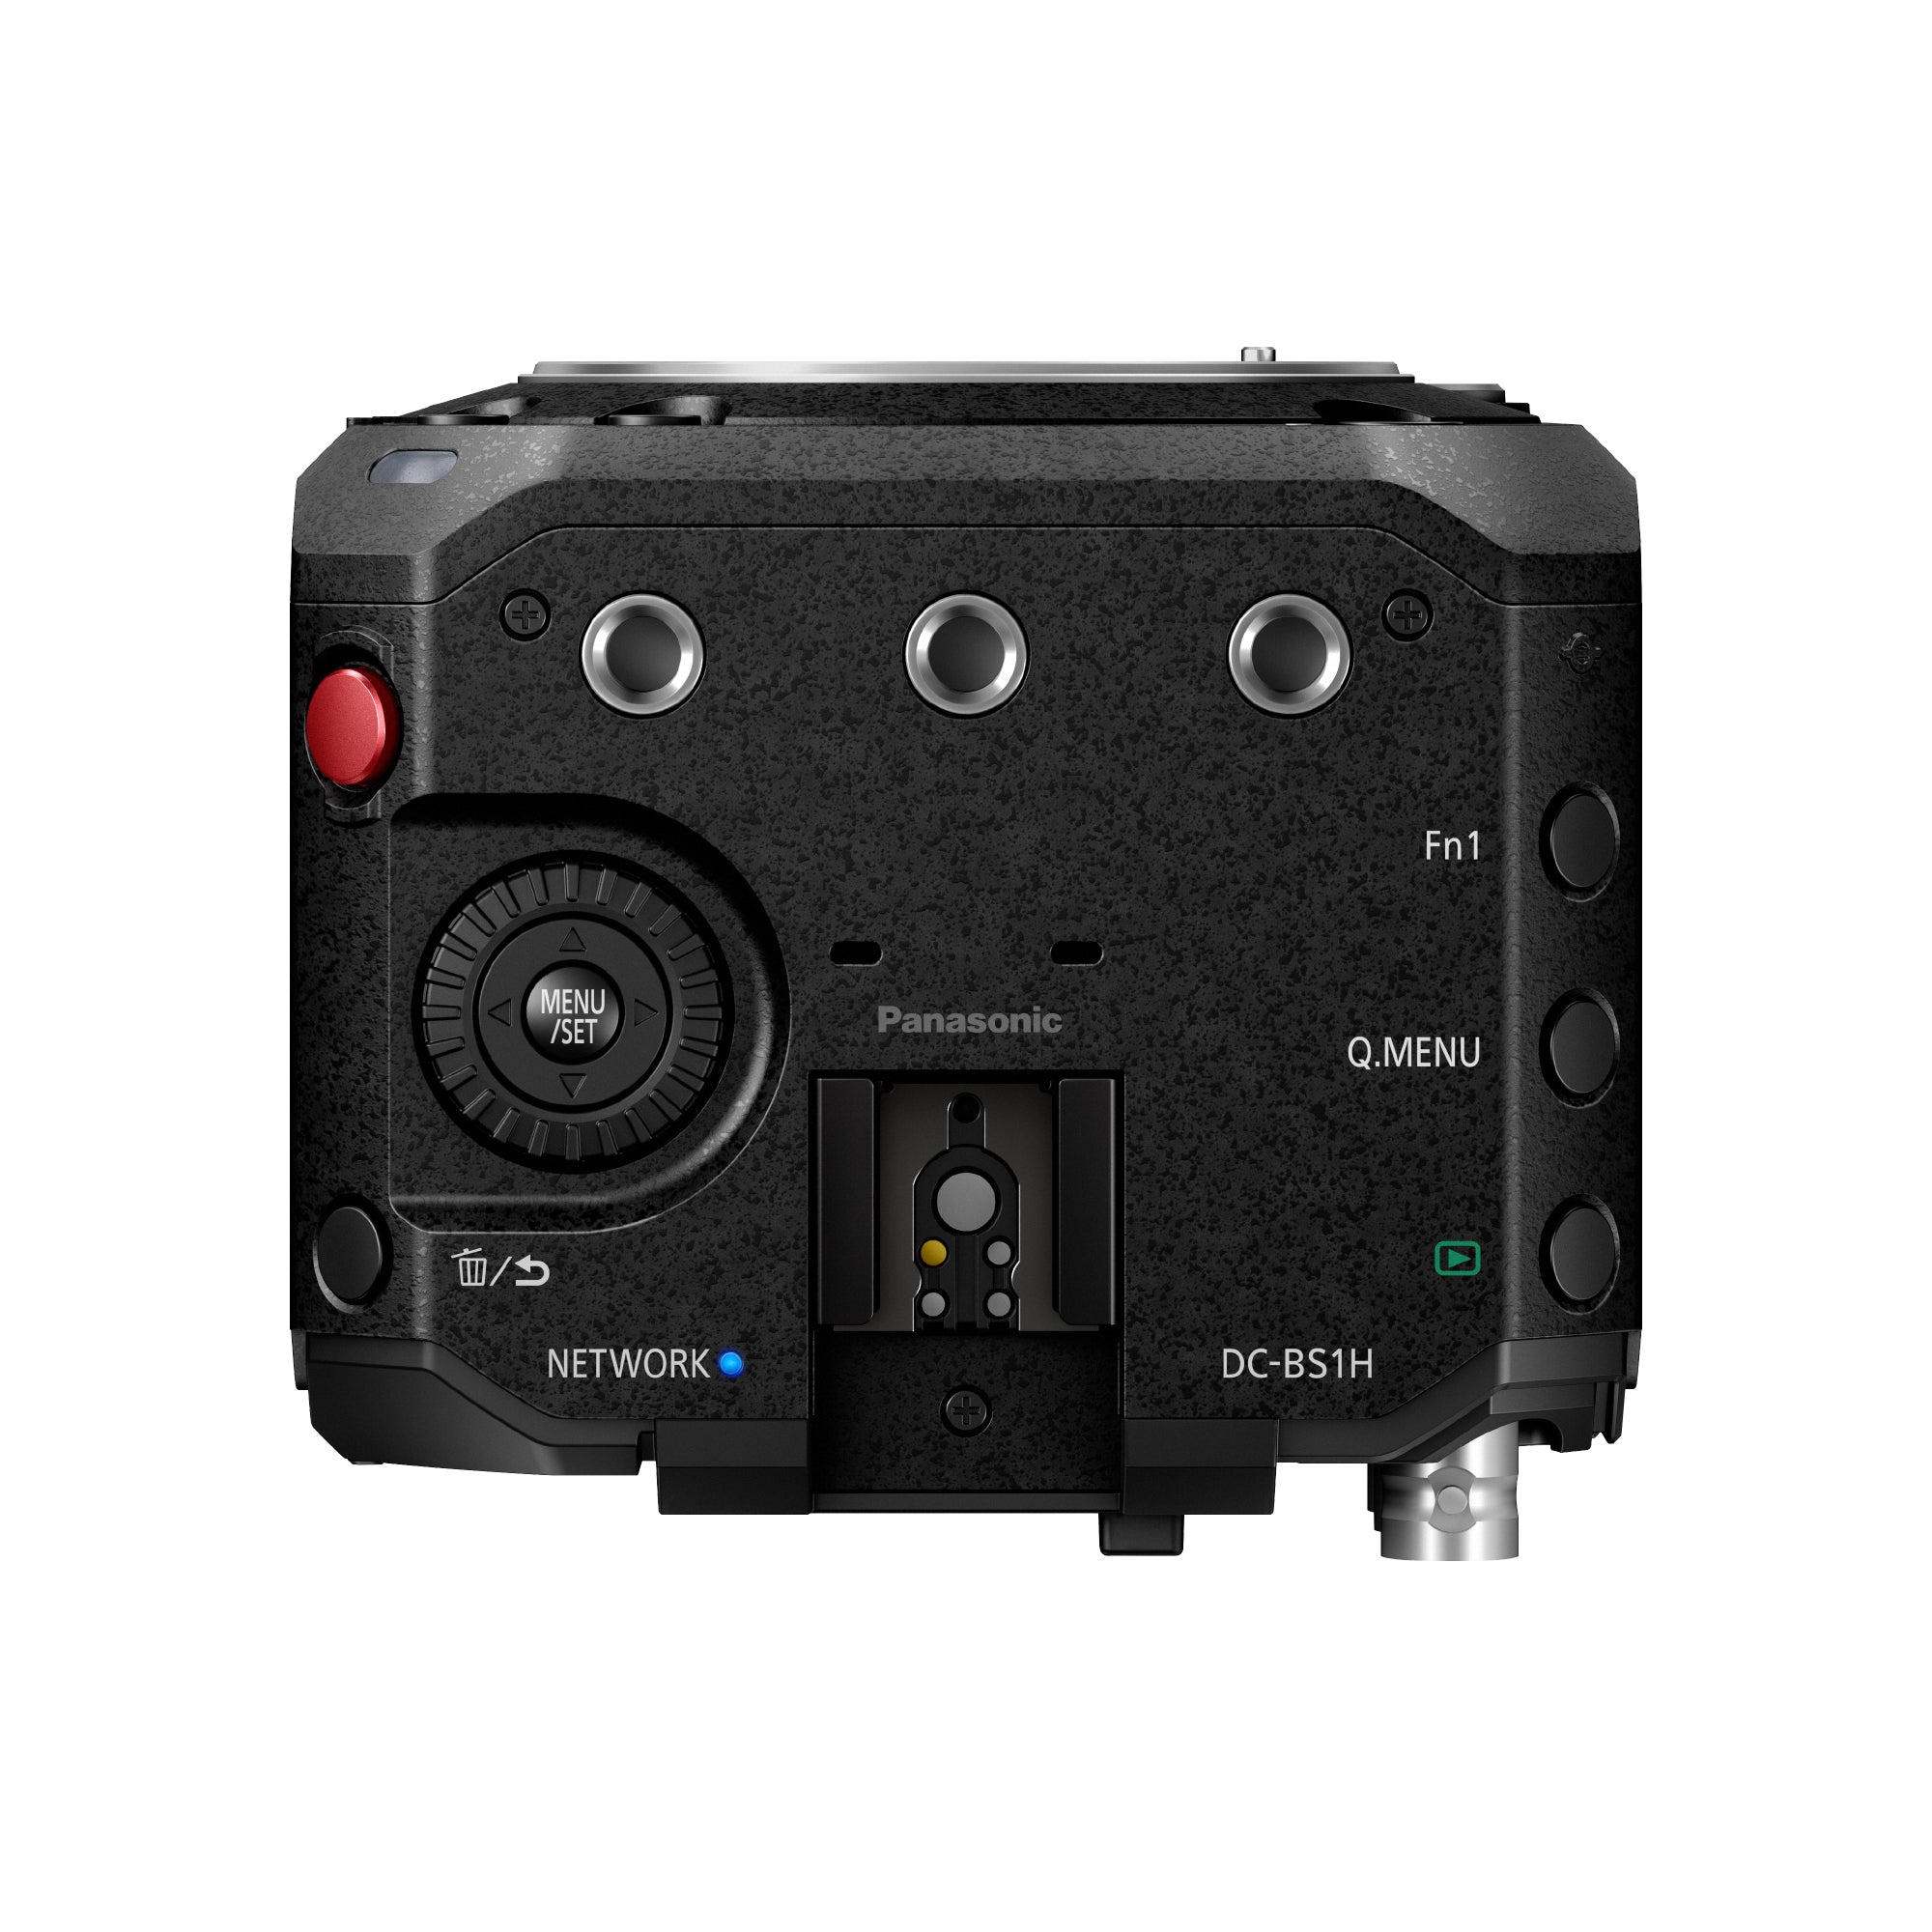 Box Camera 24.2MP Full-Frame MOS Sensor